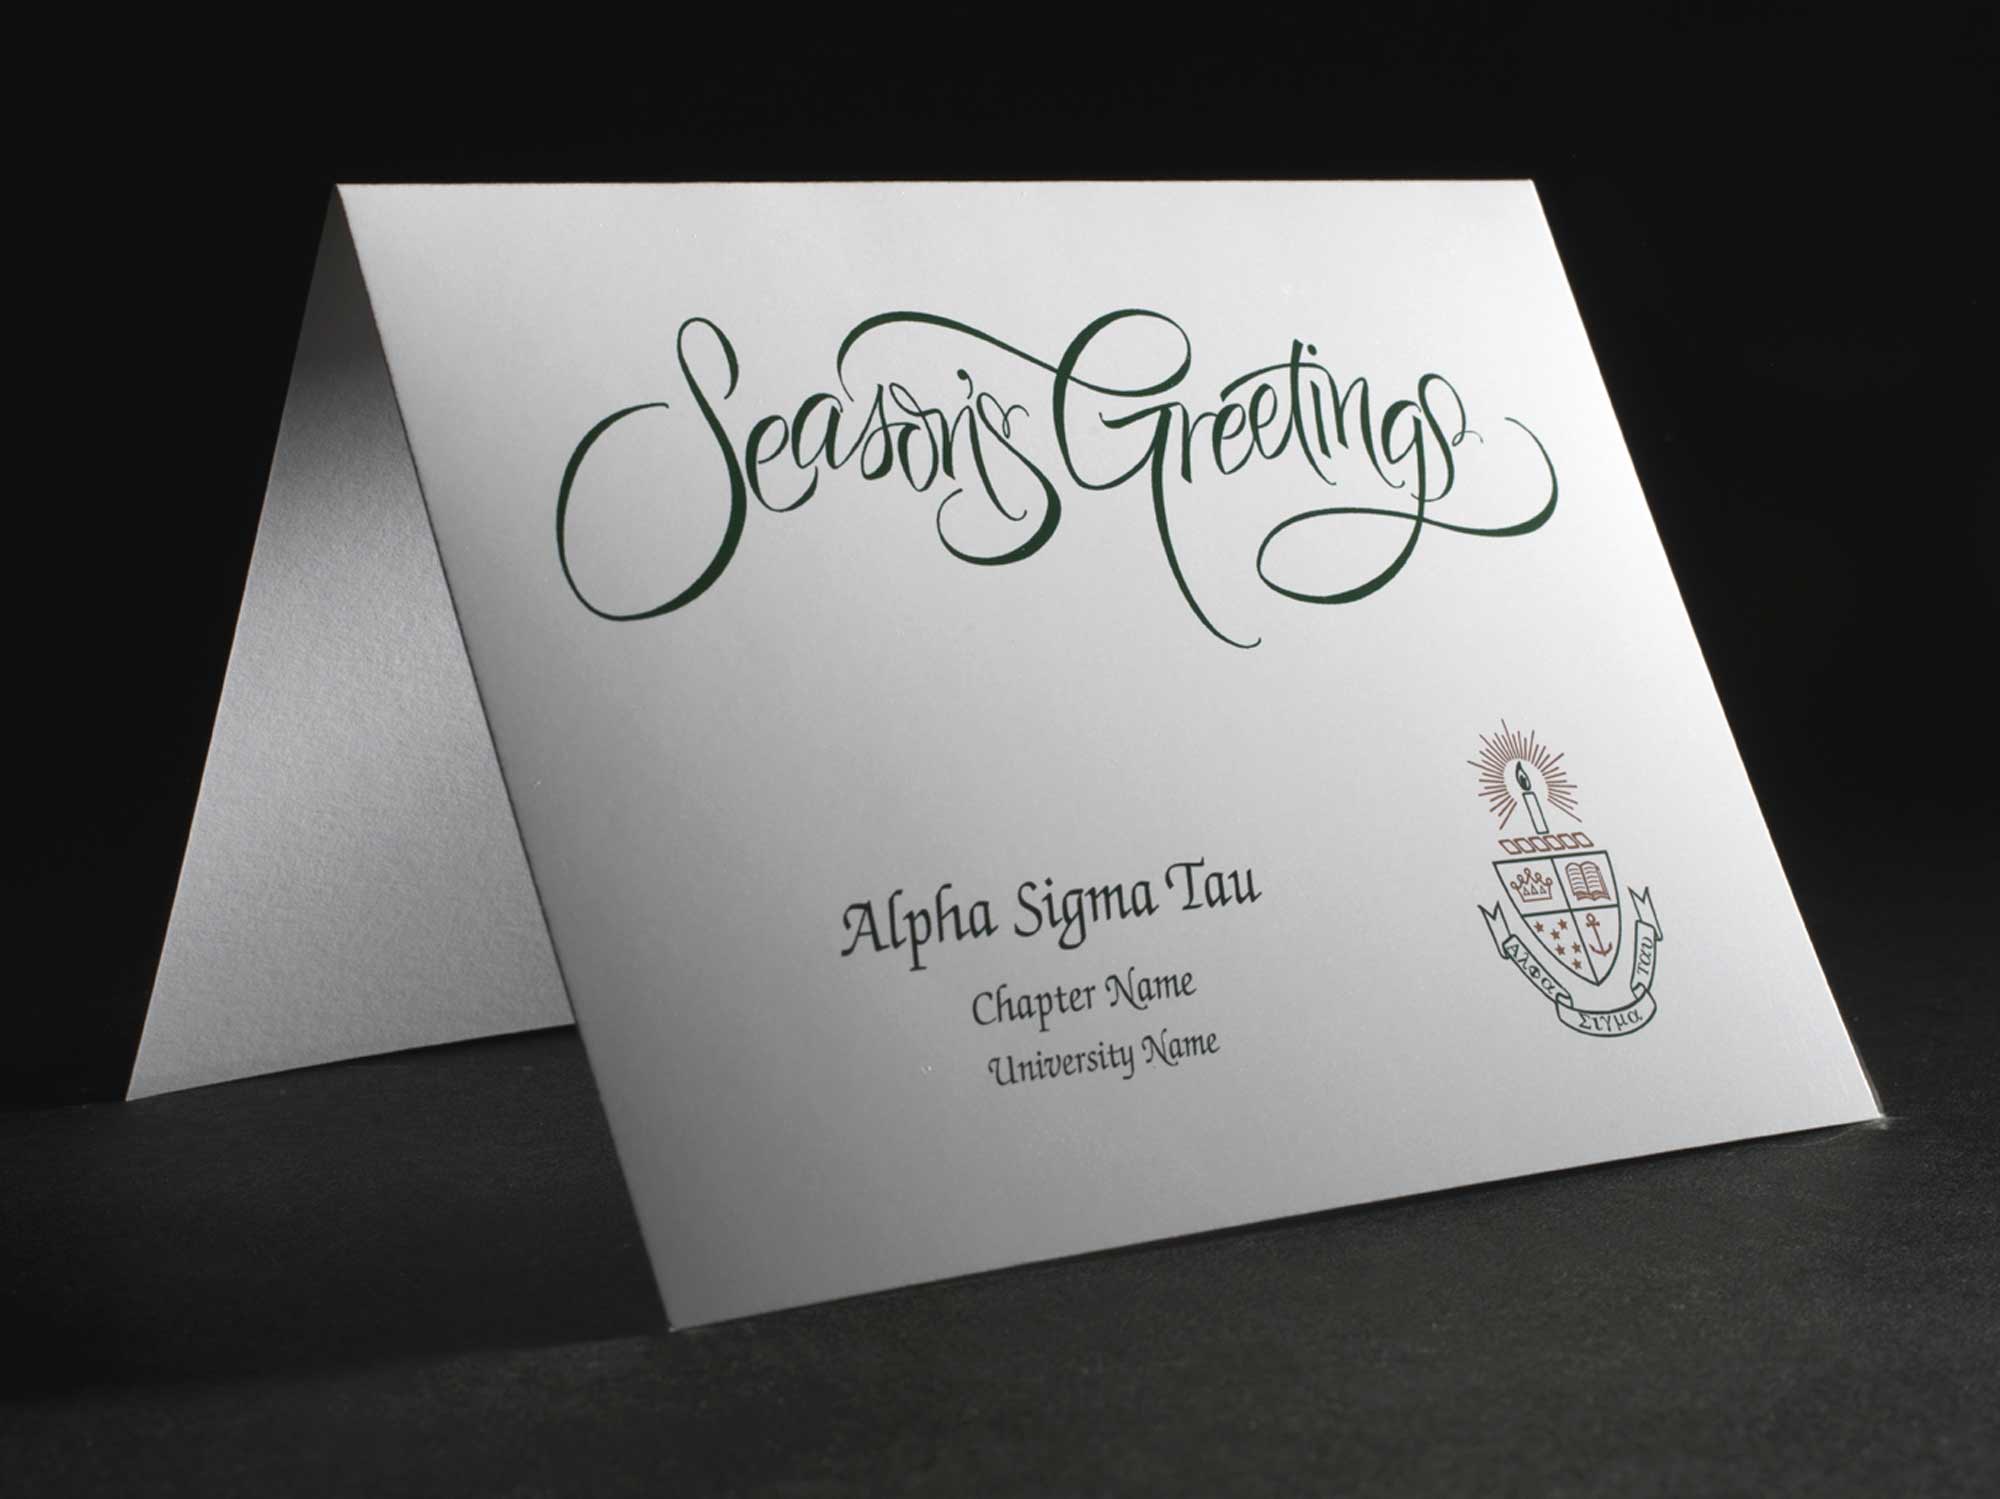 Seasons Greetings Cards Alpha Sigma Tau